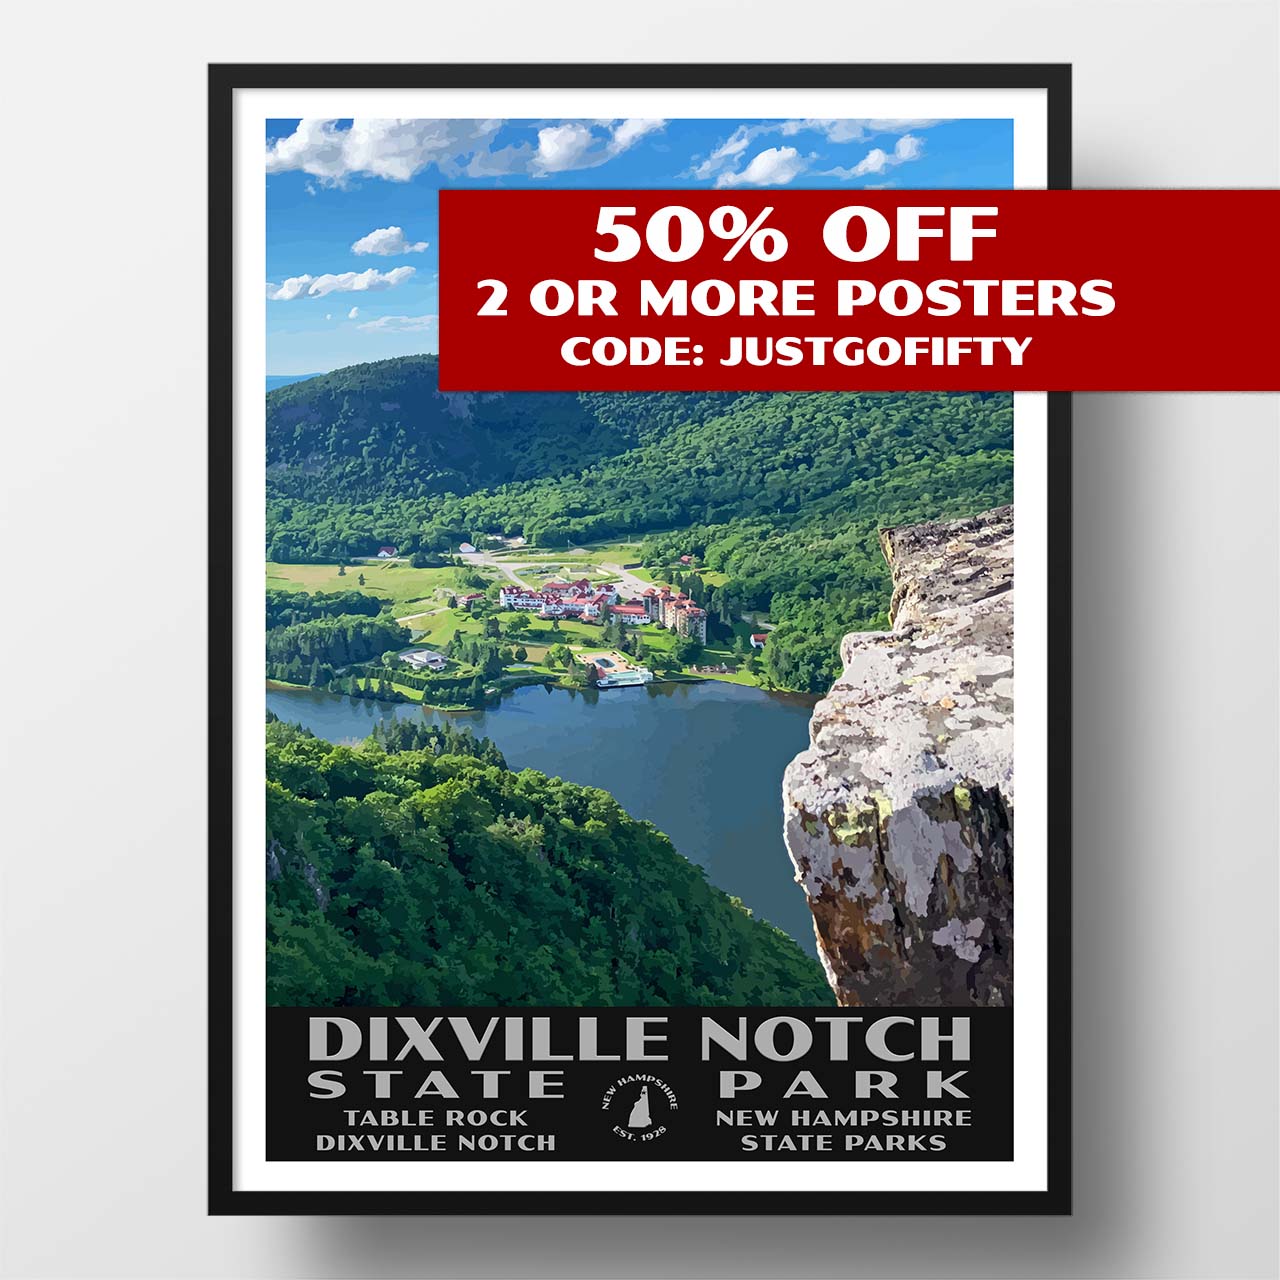 Dixville Notch State Park poster